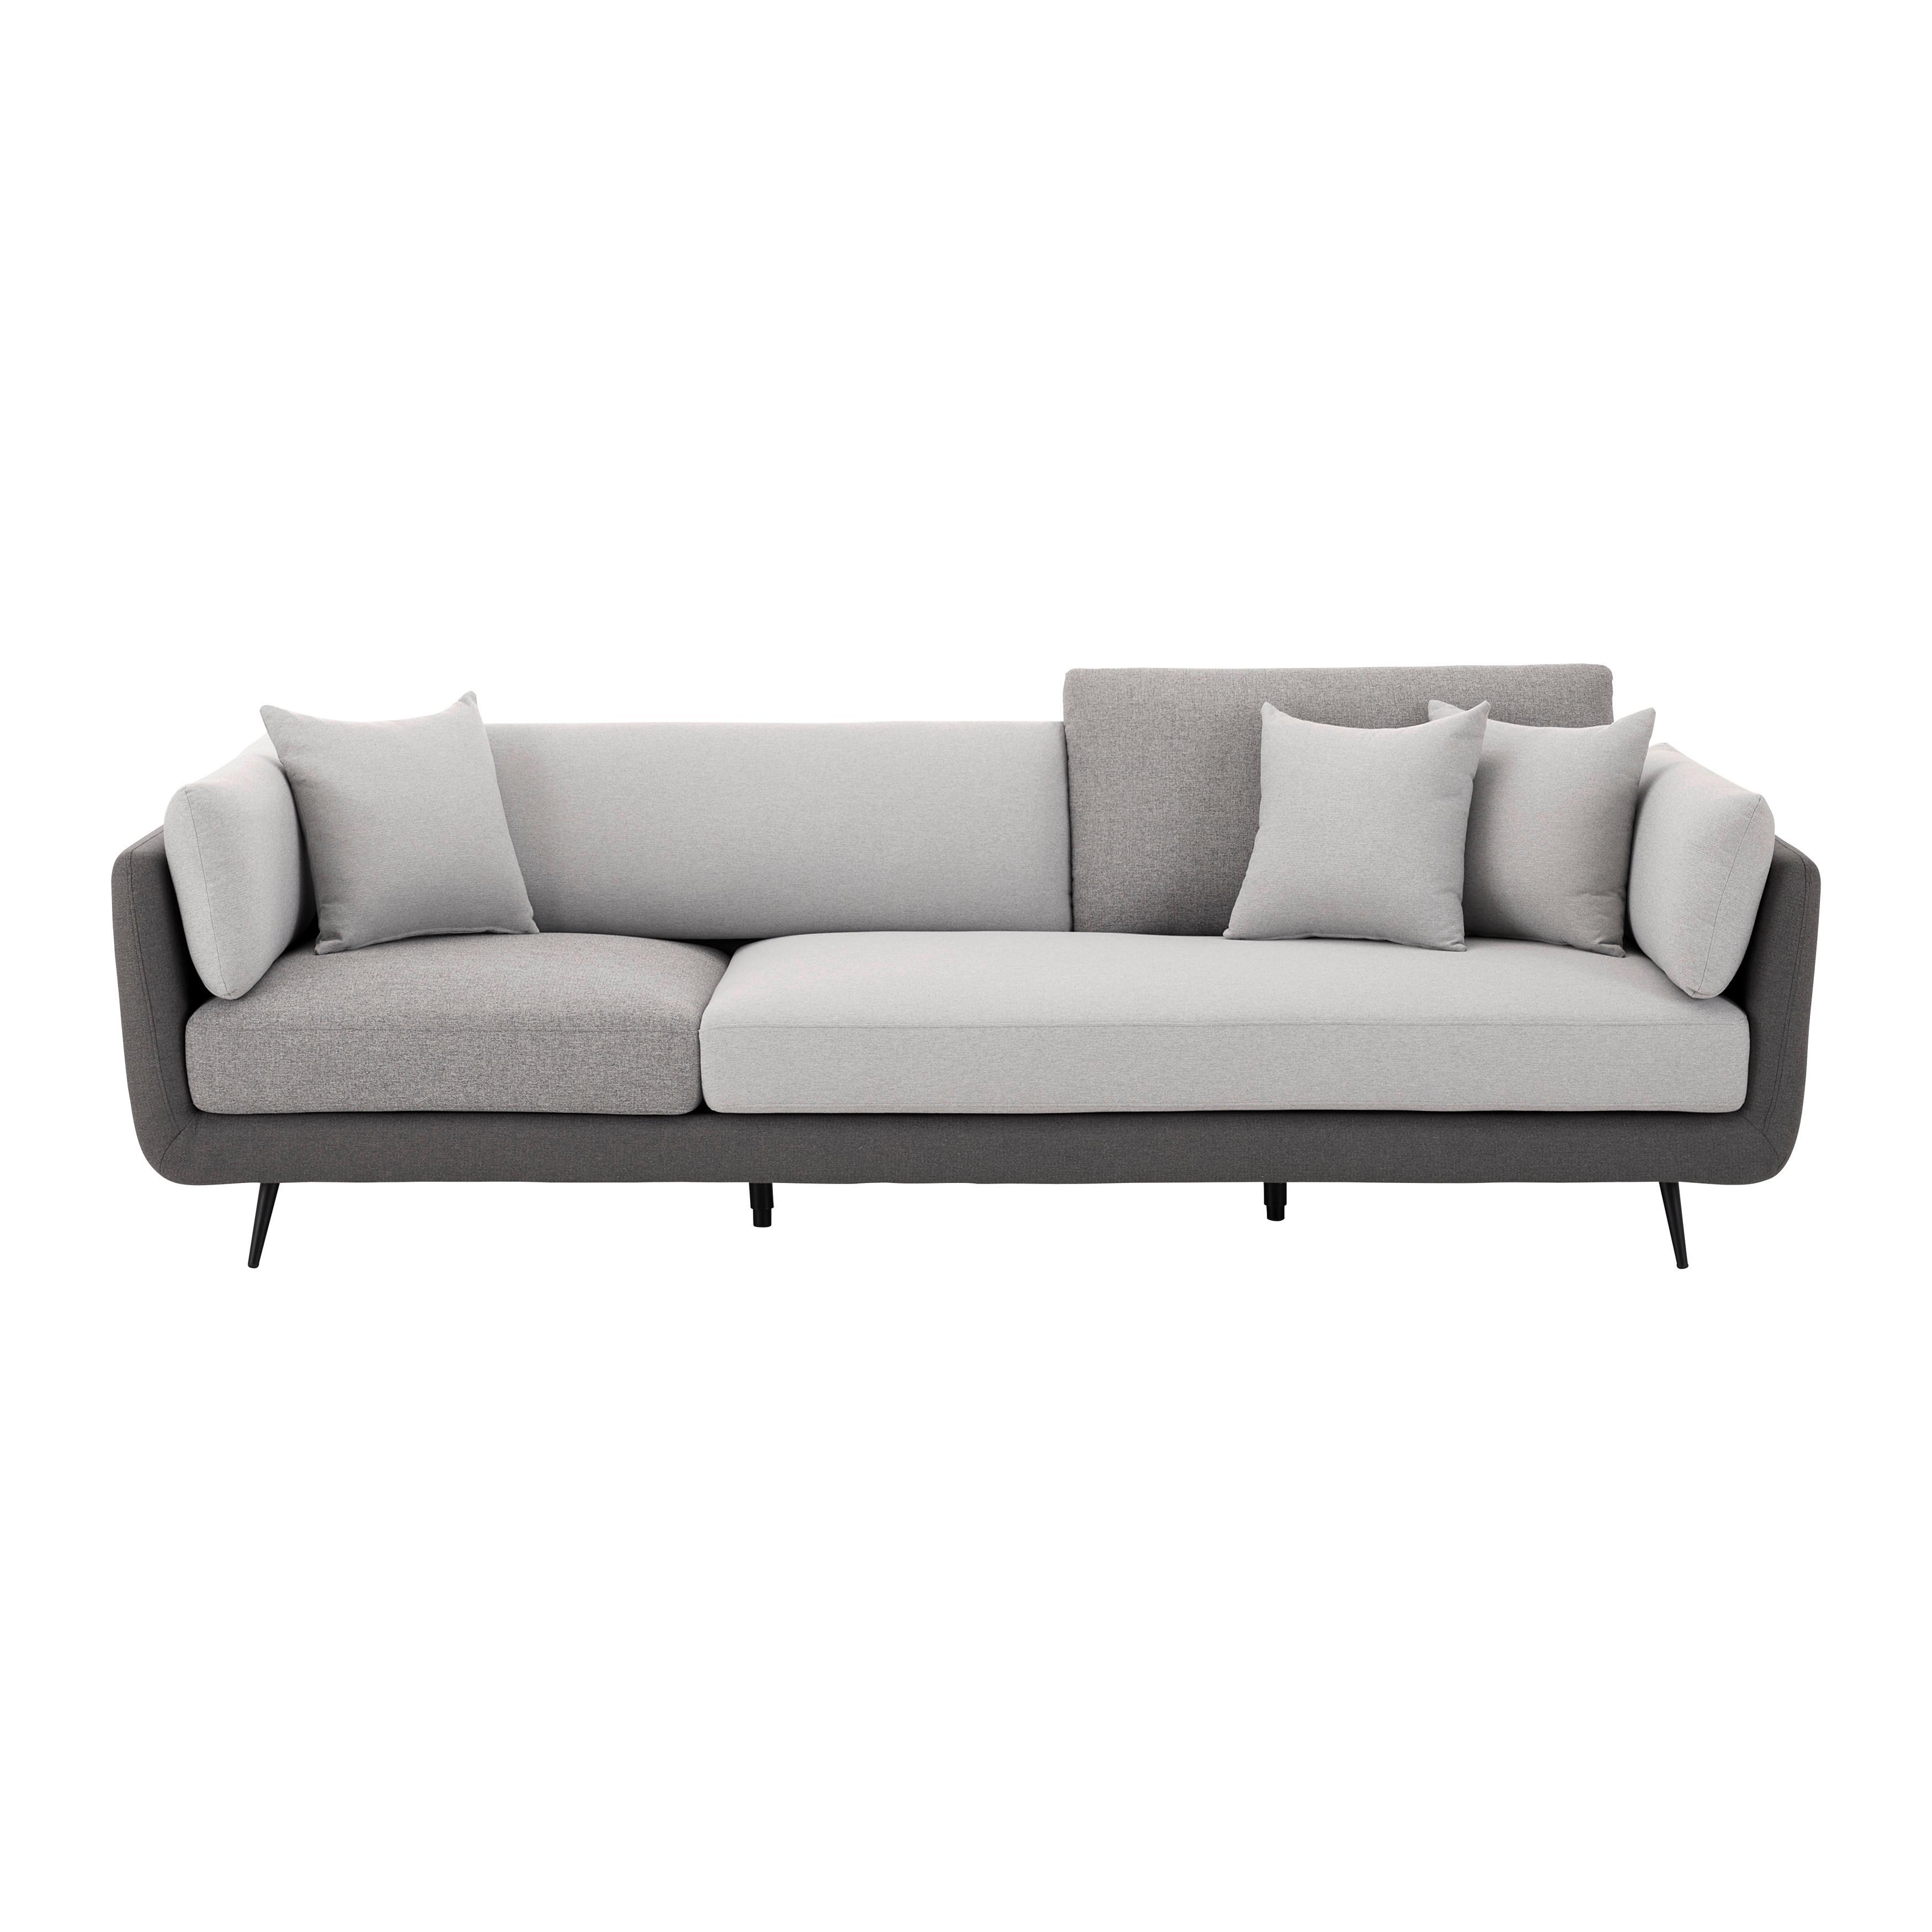 Sofa "Genesis", dreisitzer, grau - Schwarz/Grau, MODERN, Holz/Textil (261/65/91cm) - Bessagi Home